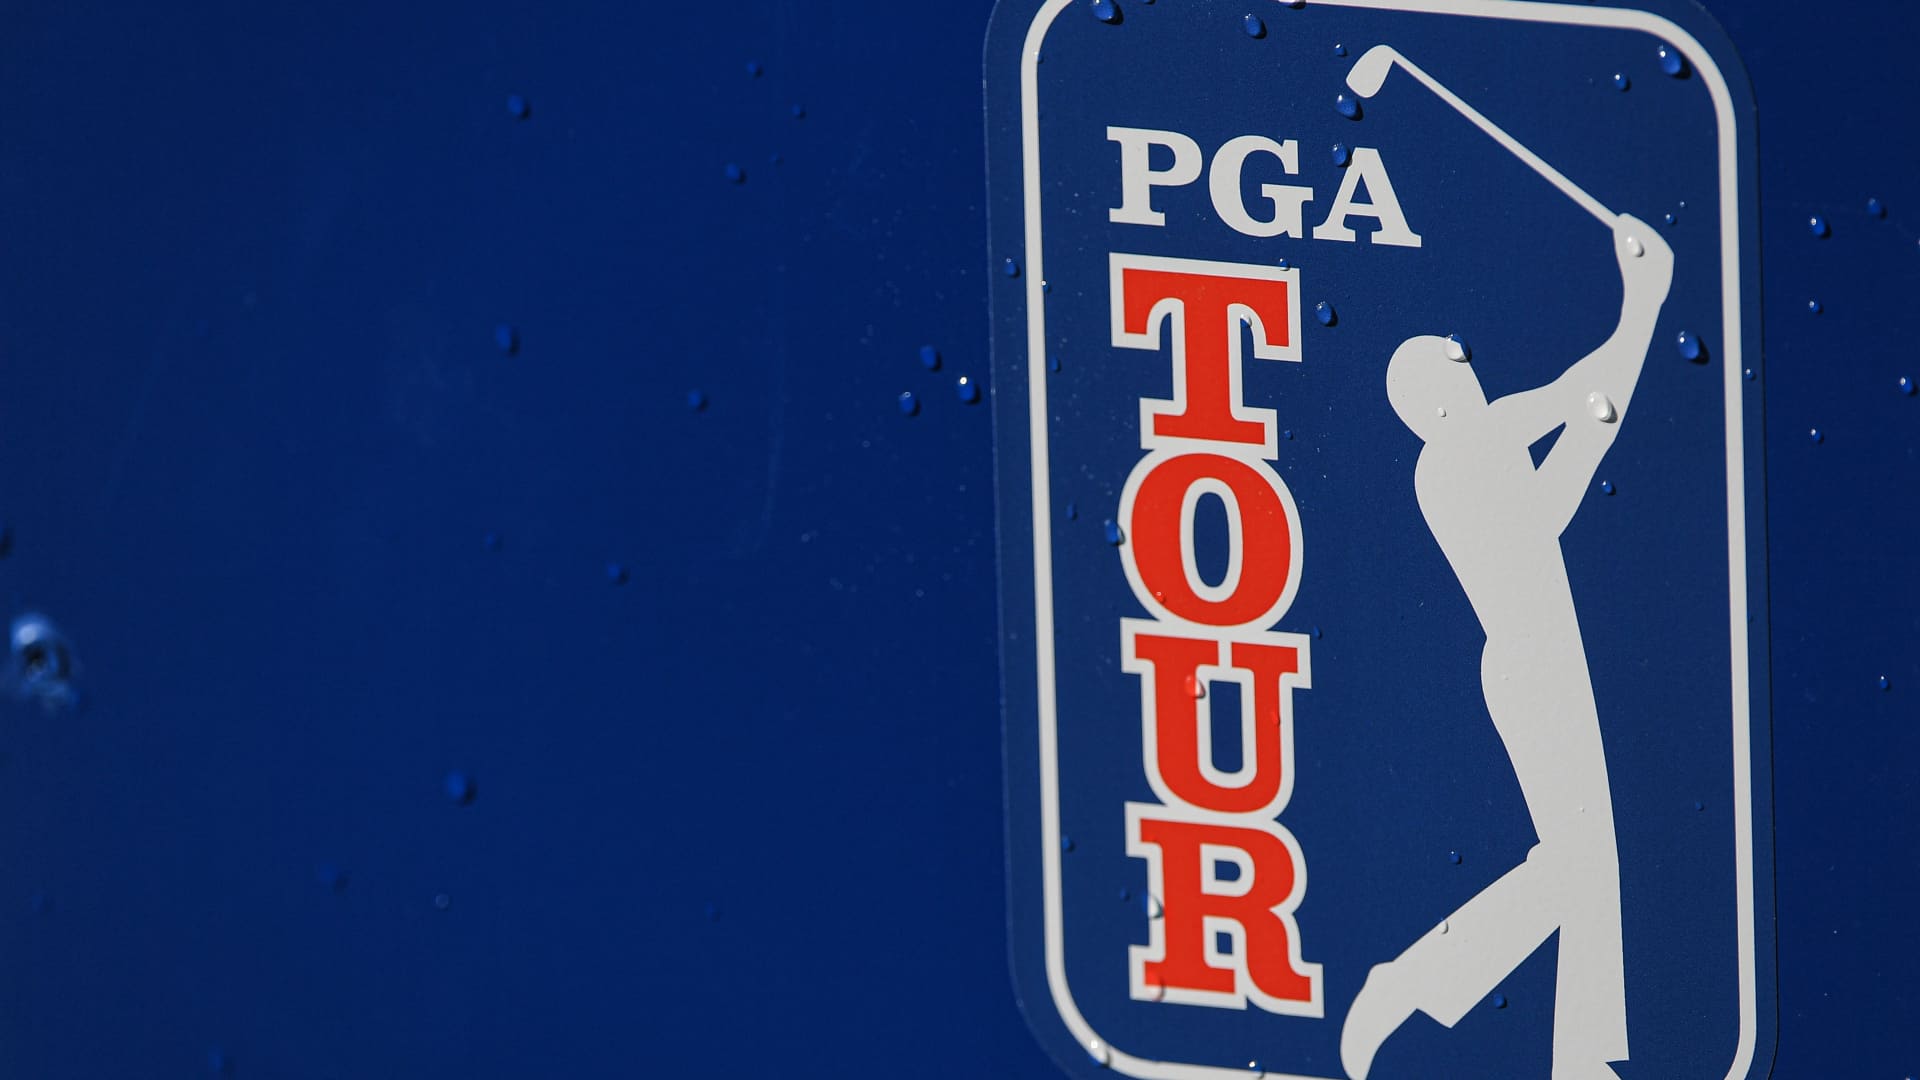 PGA Tour, LIV Golf merger: Justice Department to investigate